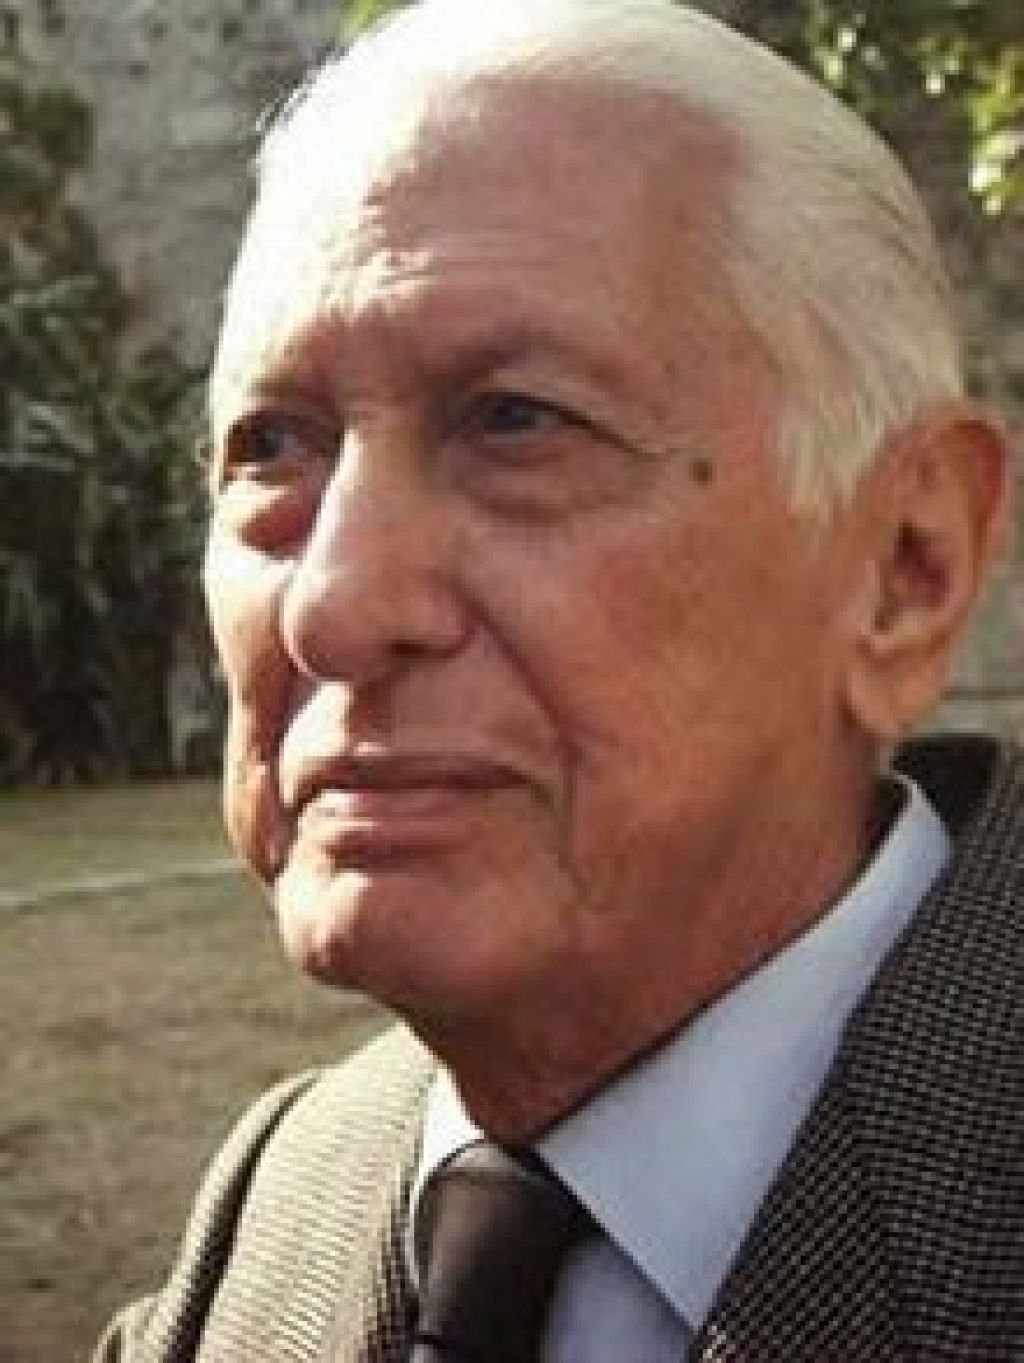 Umrl kubanski pesnik Cintio Vitier